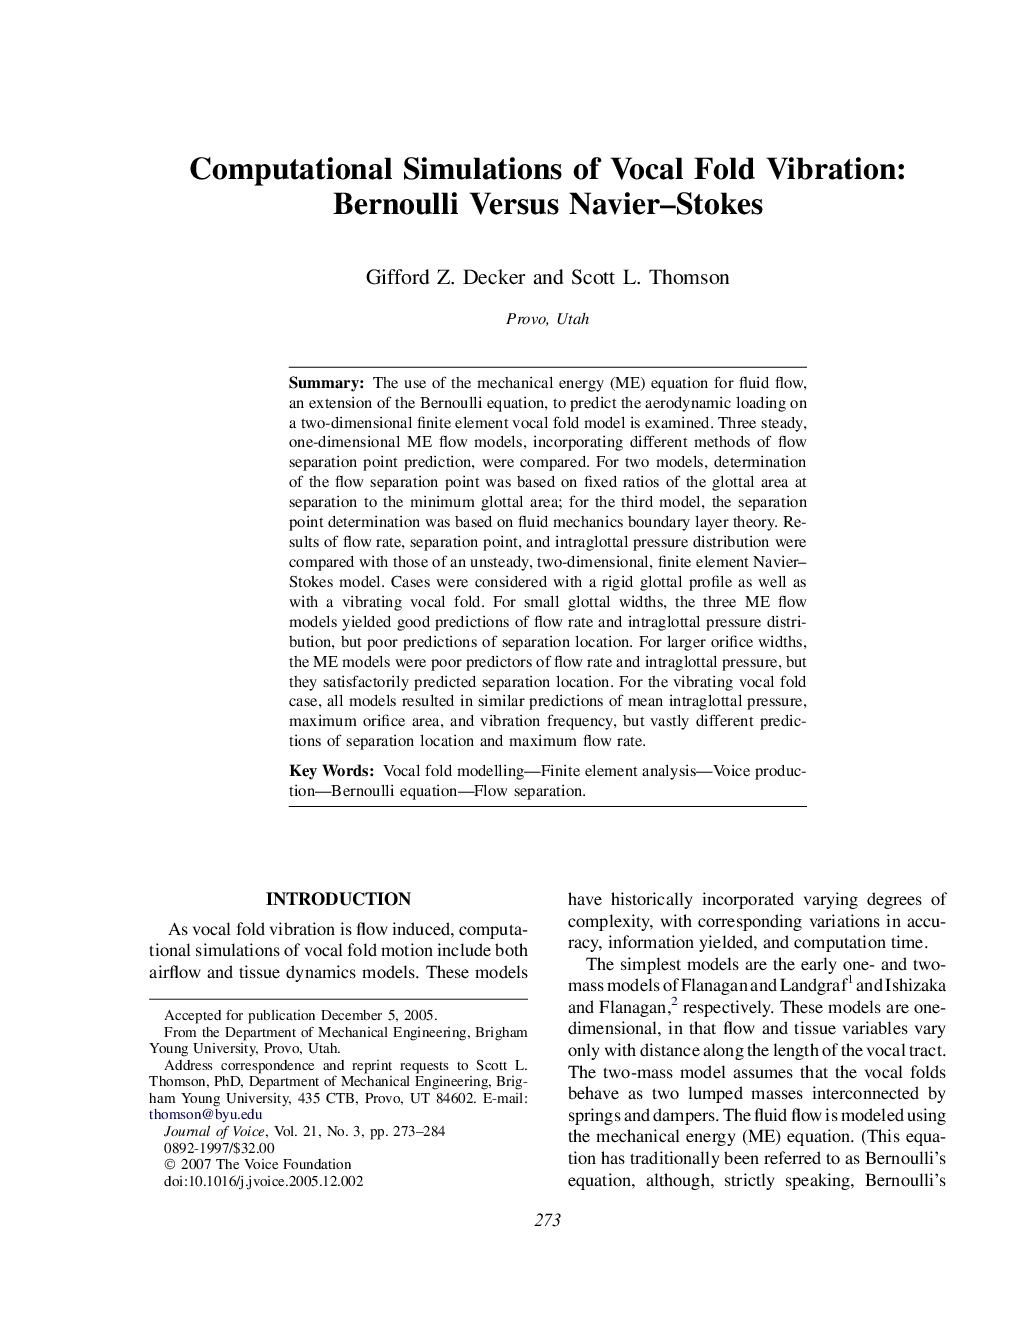 Computational Simulations of Vocal Fold Vibration: Bernoulli Versus Navier–Stokes